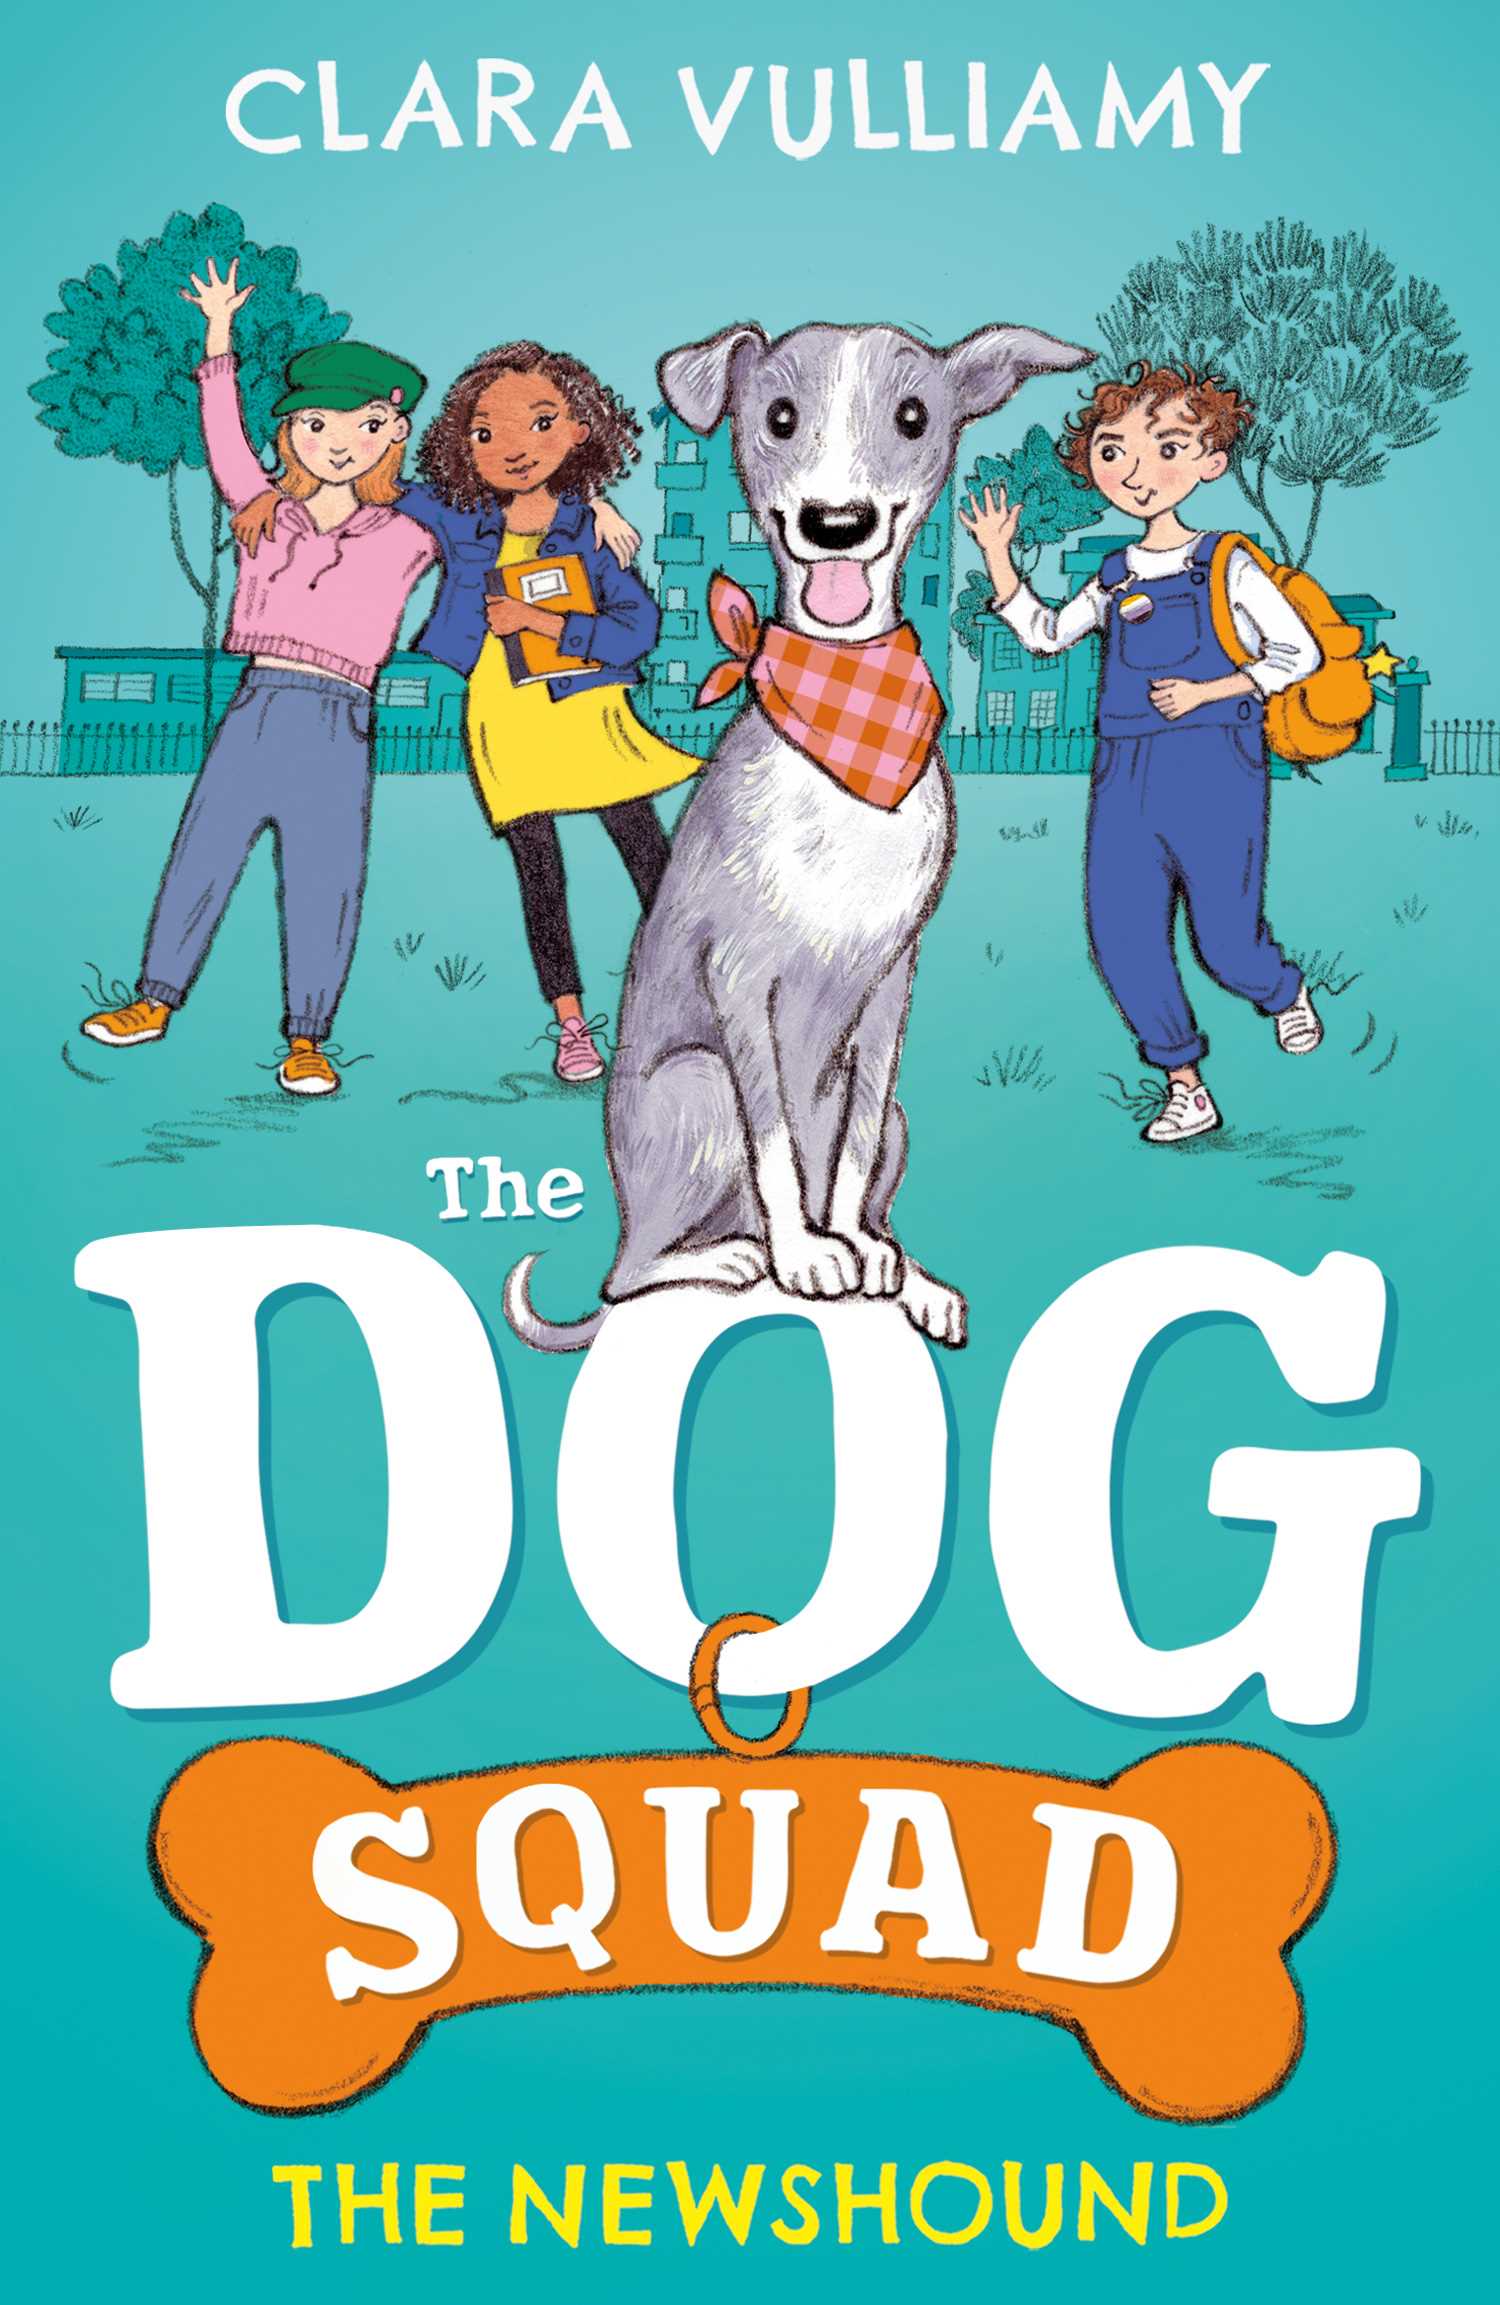 The Newshound (The Dog Squad)